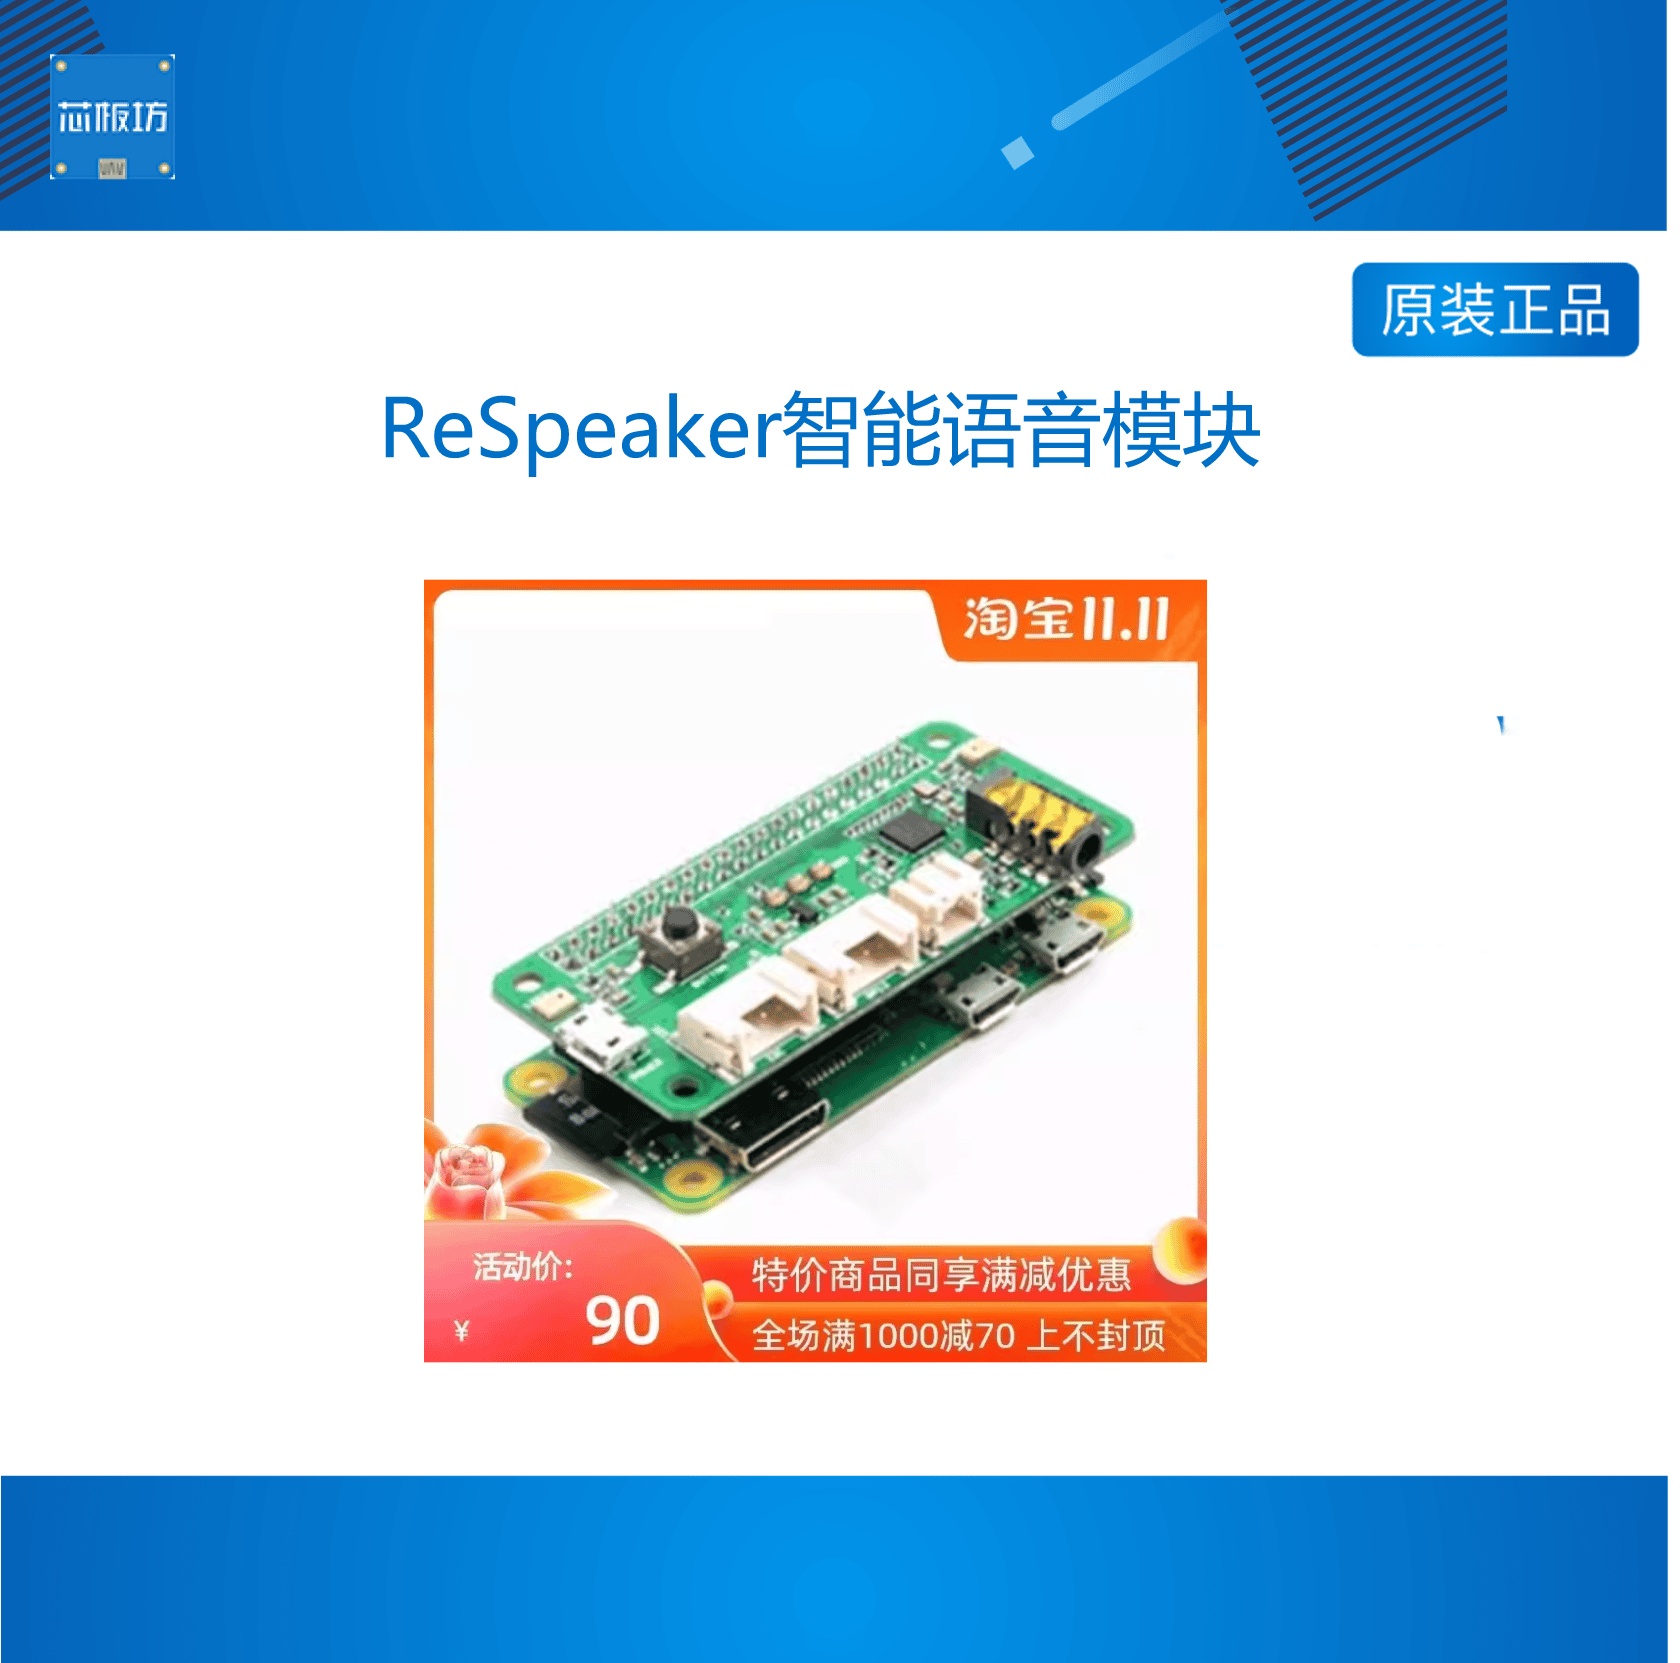 ReSpeaker智能语音模块 兼容Raspberry pi 树莓派 芯板坊人气推荐